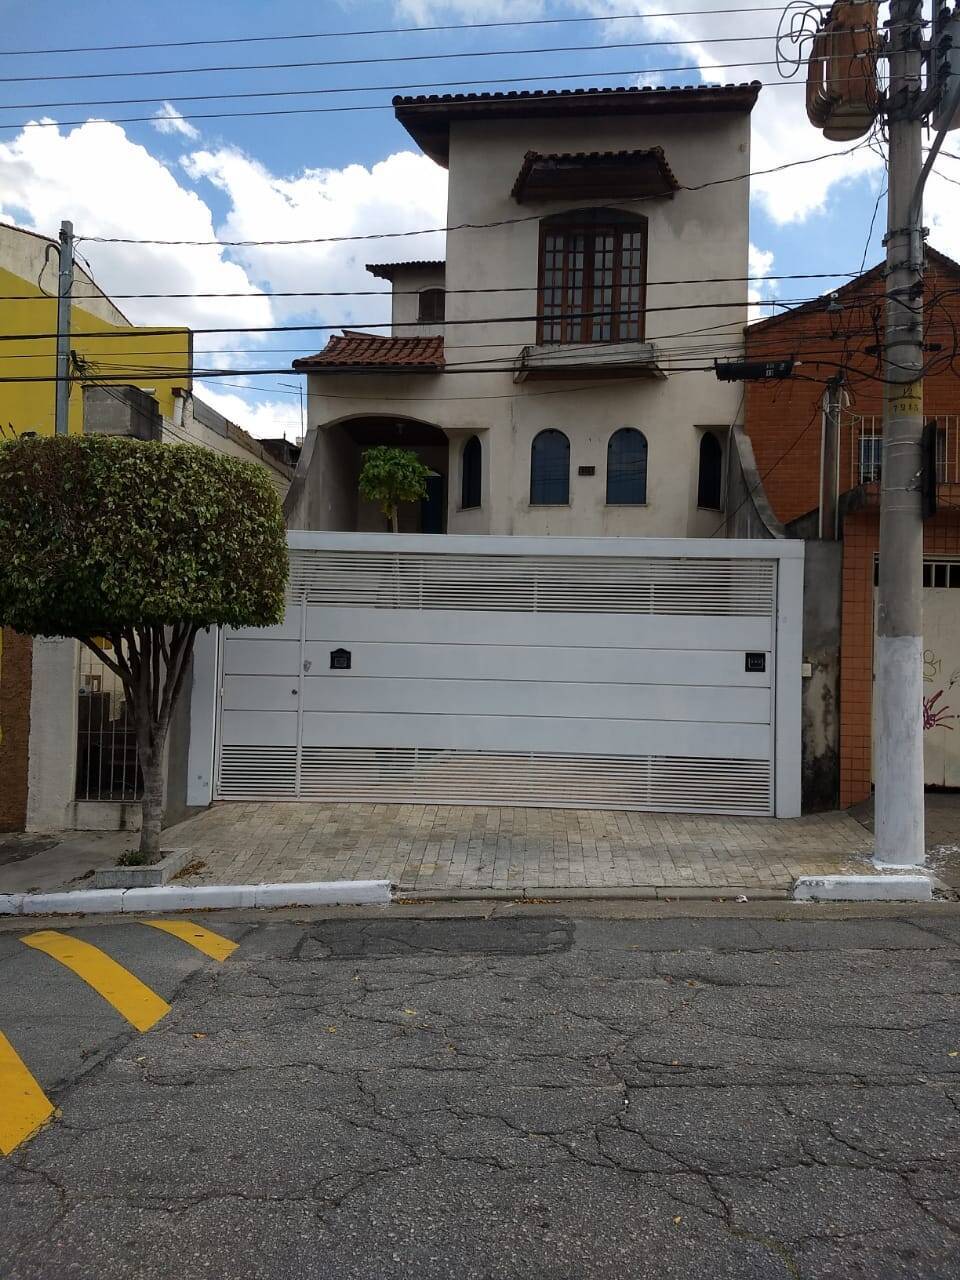 Foto Casa Sobrado c/ 02 dormit�rios, 02 su�tes e 04 vg(s) garagem - Vl. Formosa 674c4090